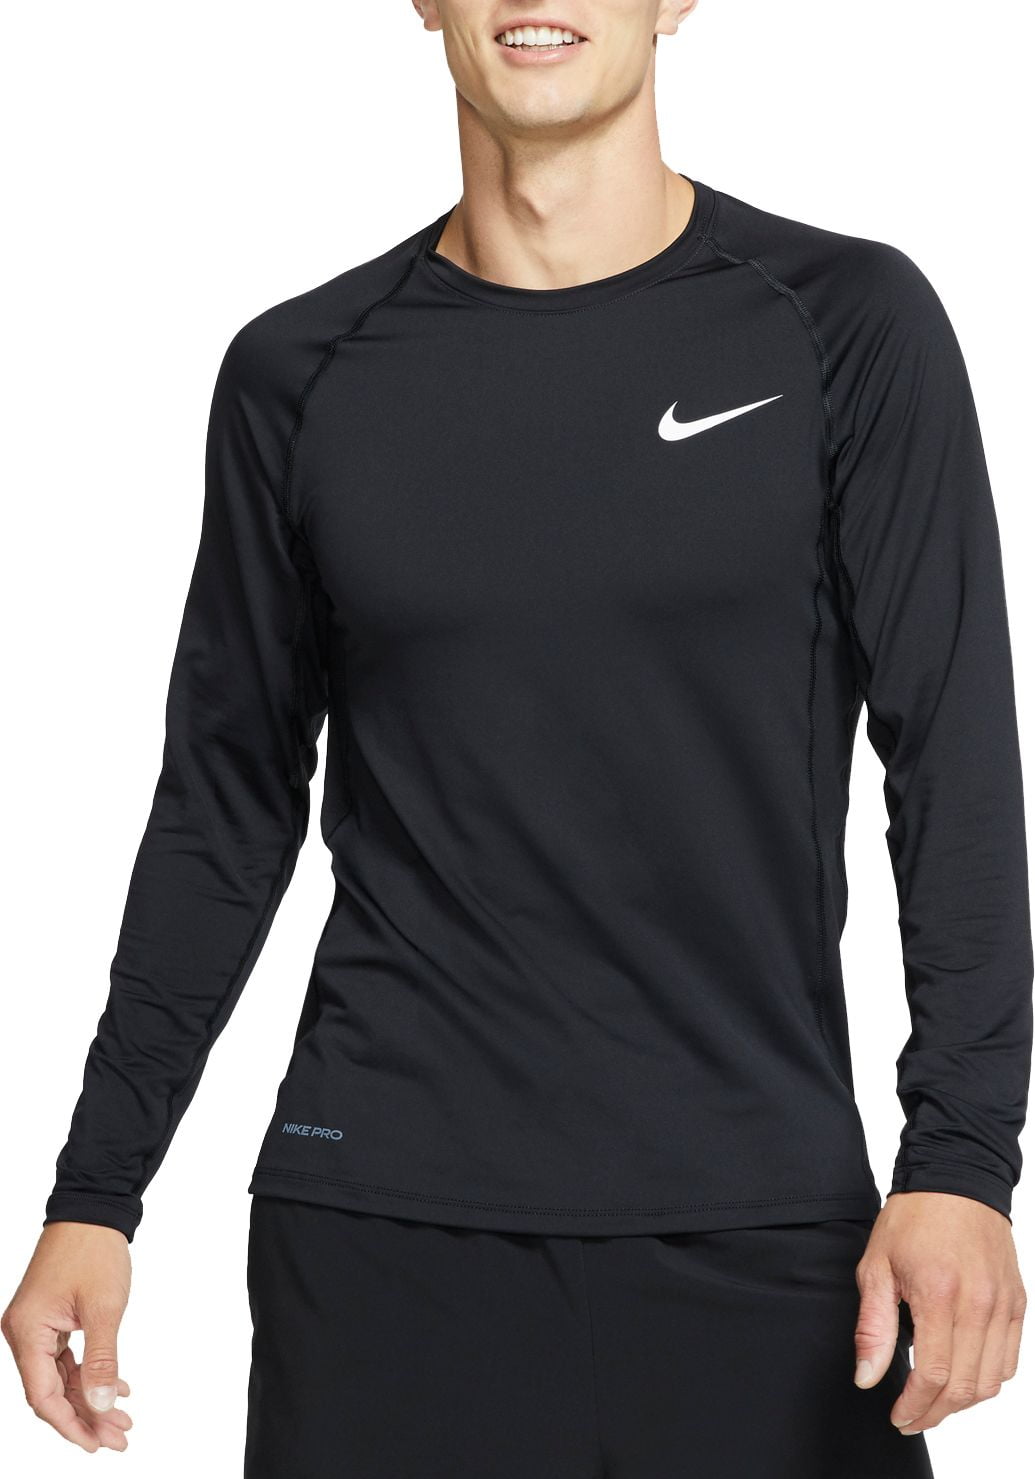 Nike - Nike Men's Pro Slim Fit Long Sleeve Shirt - Walmart.com ...